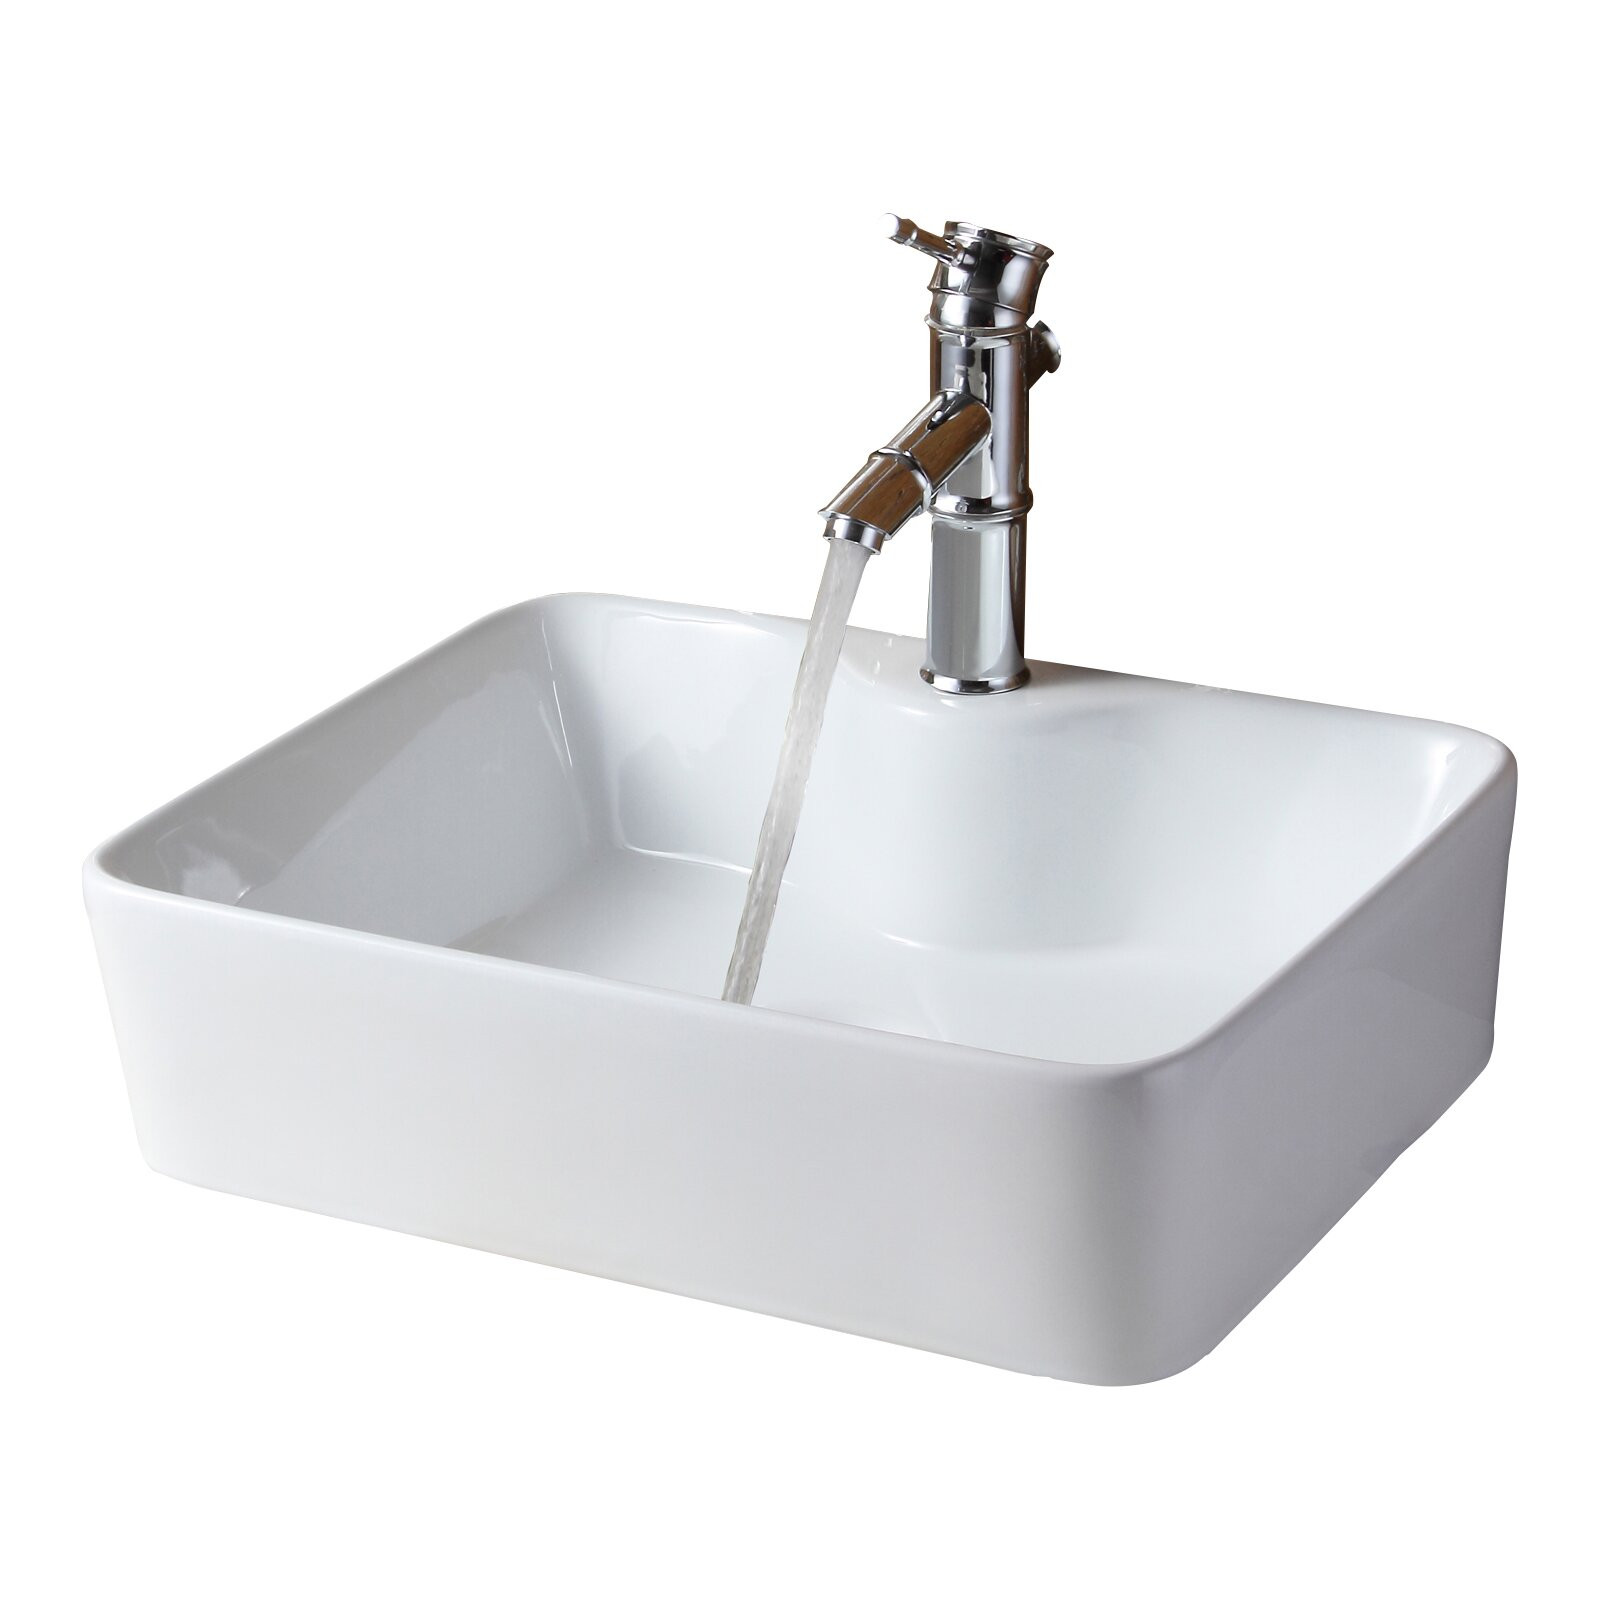 Wayfair Bathroom Sinks
 Ceramic Rectangular Vessel Bathroom Sink